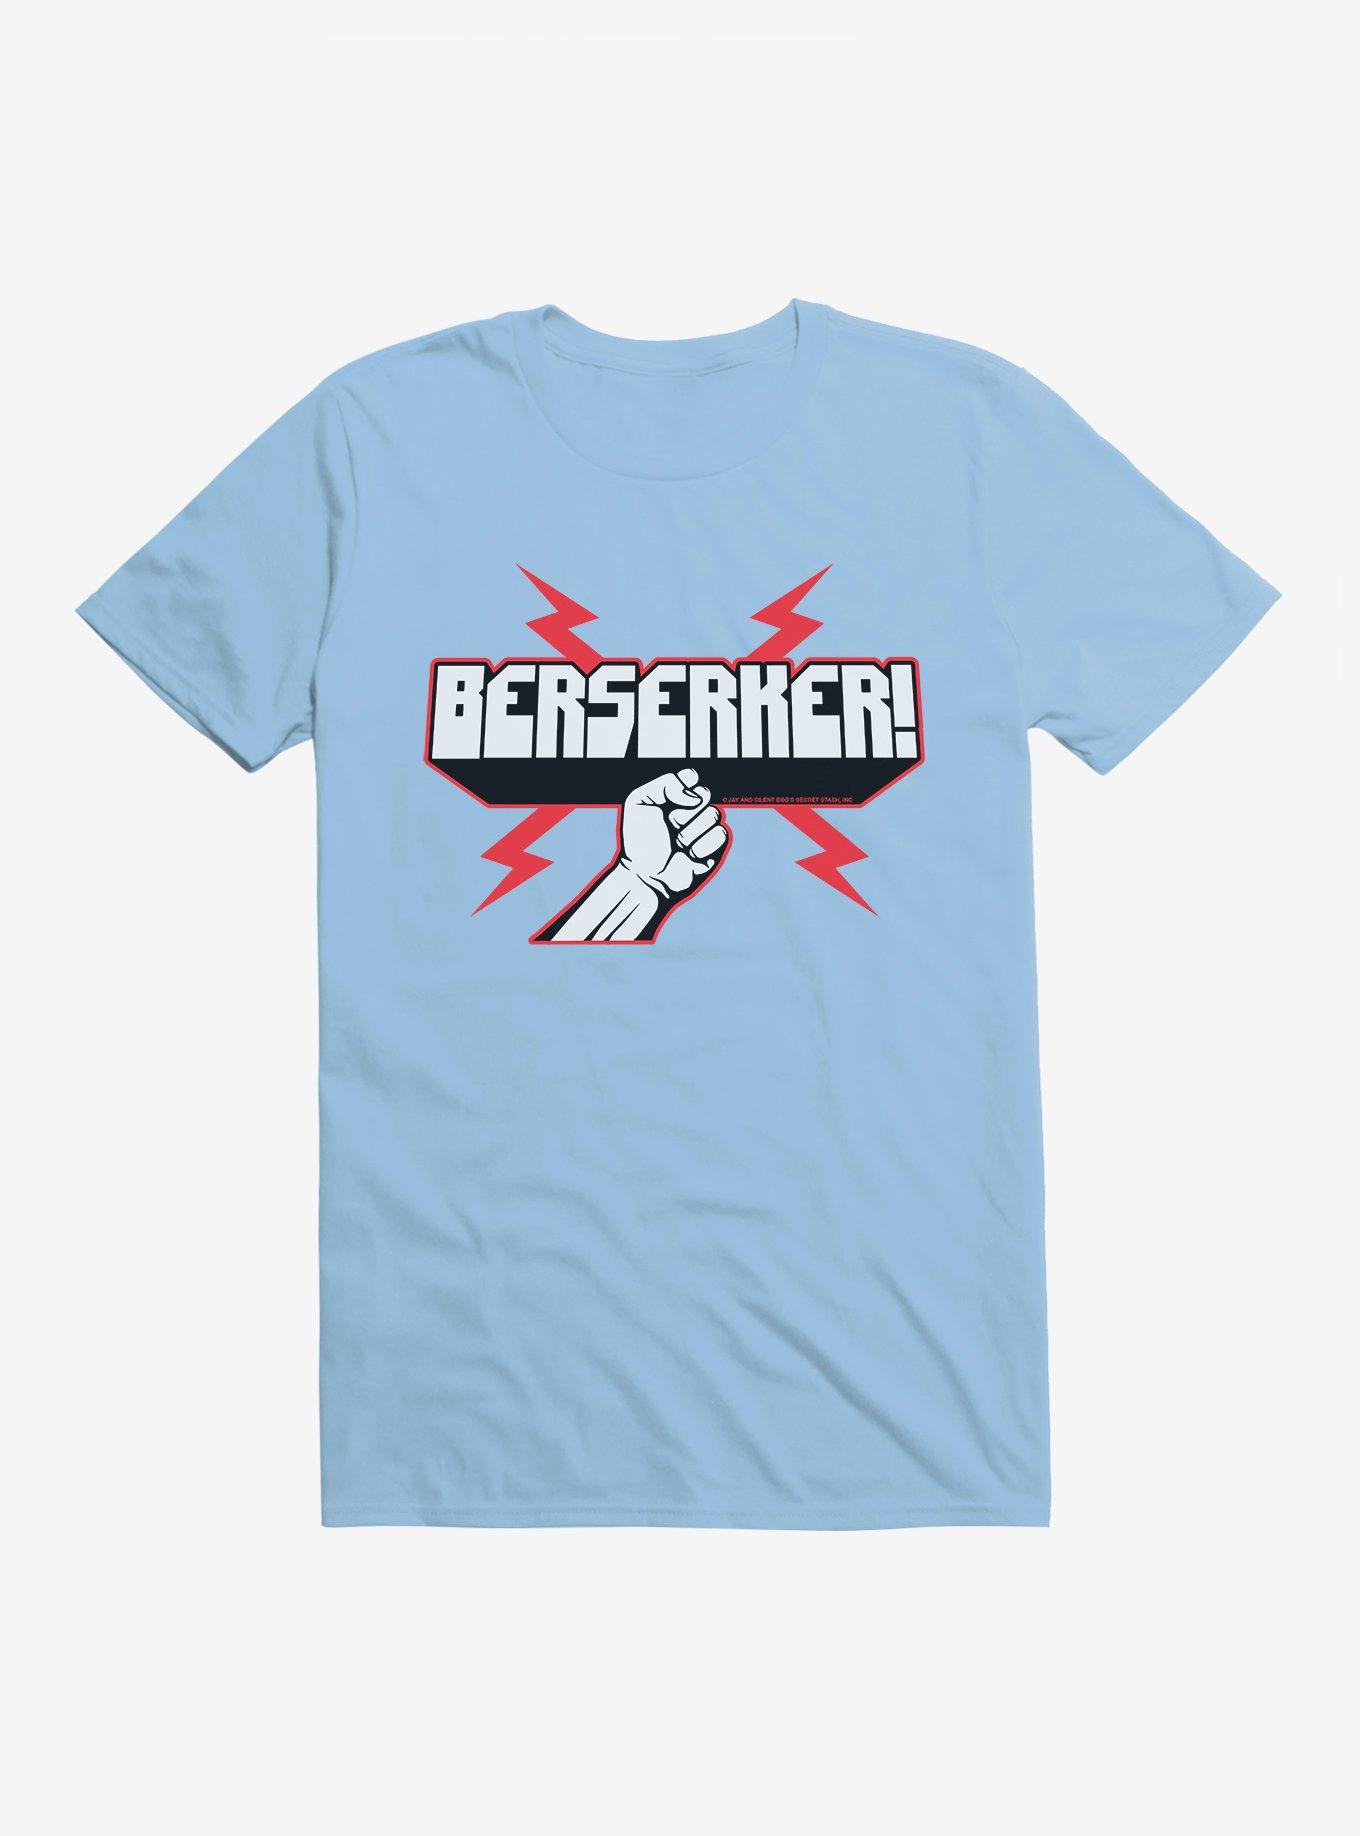 Jay And Silent Bob Berserker! T-Shirt, LIGHT BLUE, hi-res